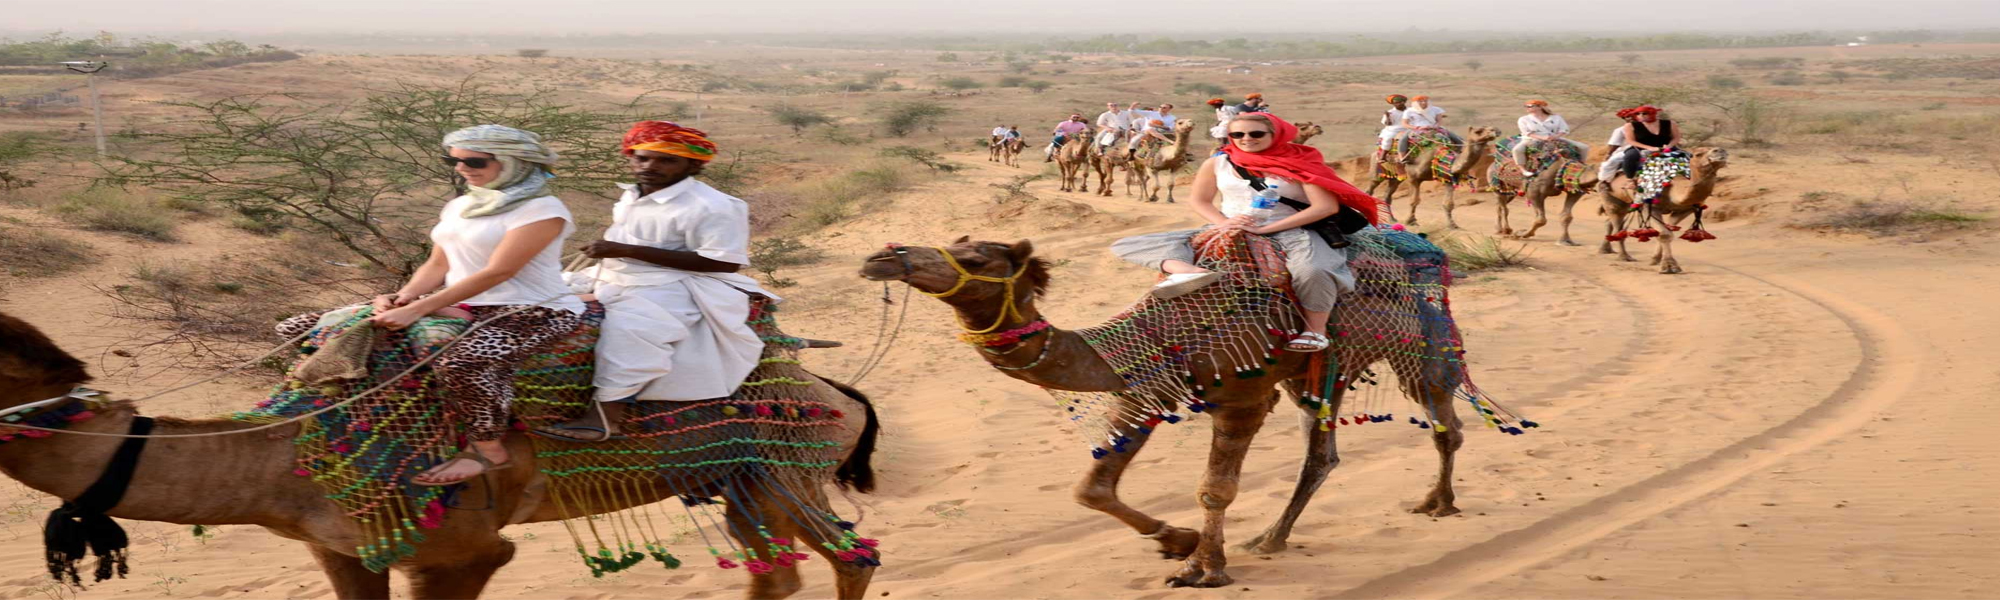 Desert Festival Tour in Rajasthan with Camel Safari Tour in Rajasthan  